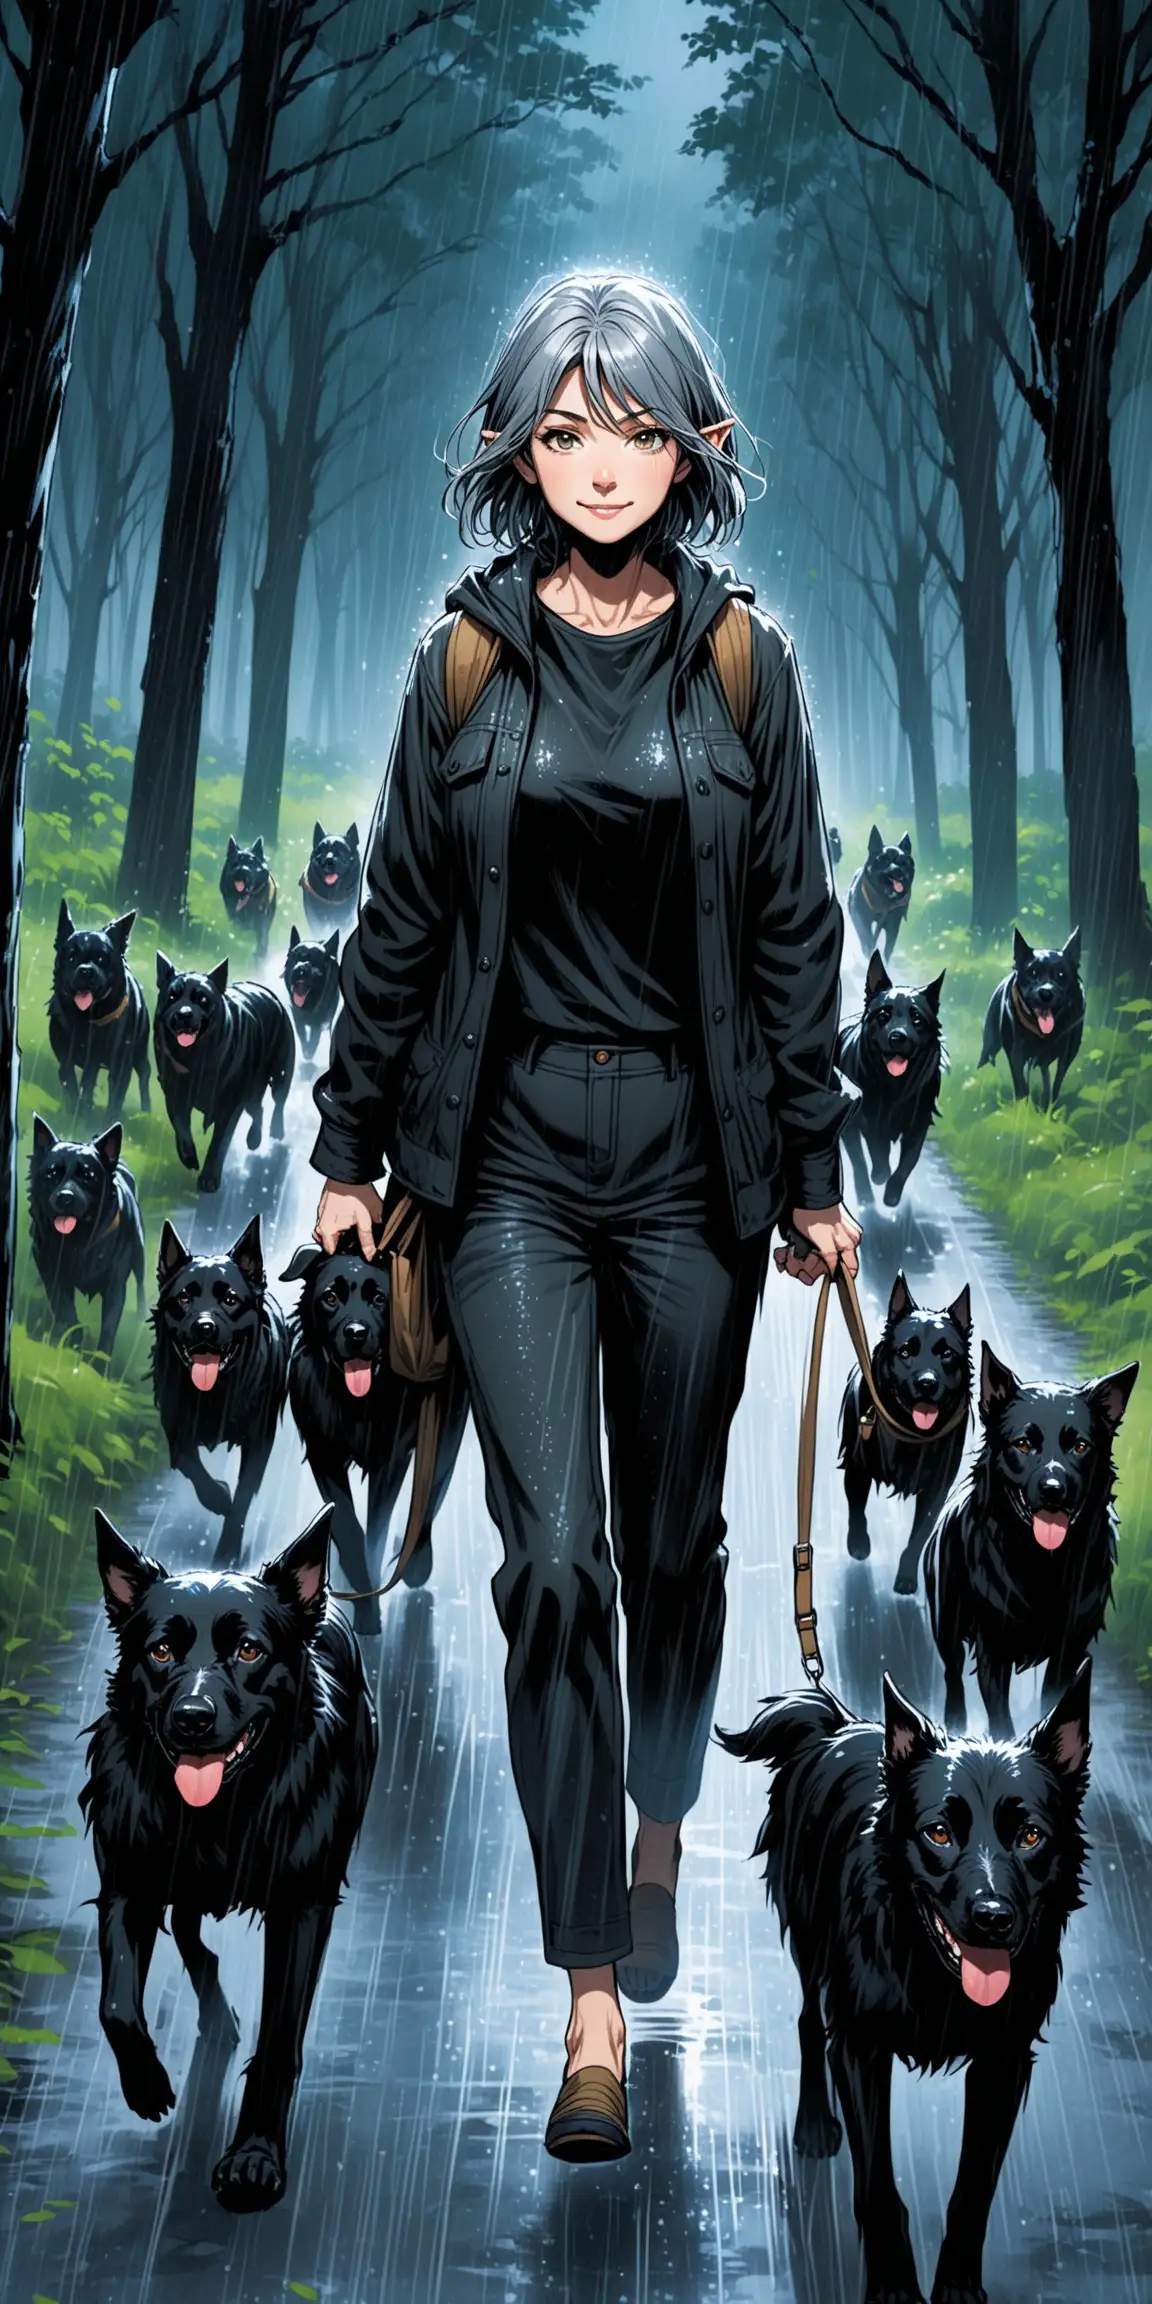 Happy MiddleAged Woman Goblin Walking Pack of Black Dogs in Dark Night Woods